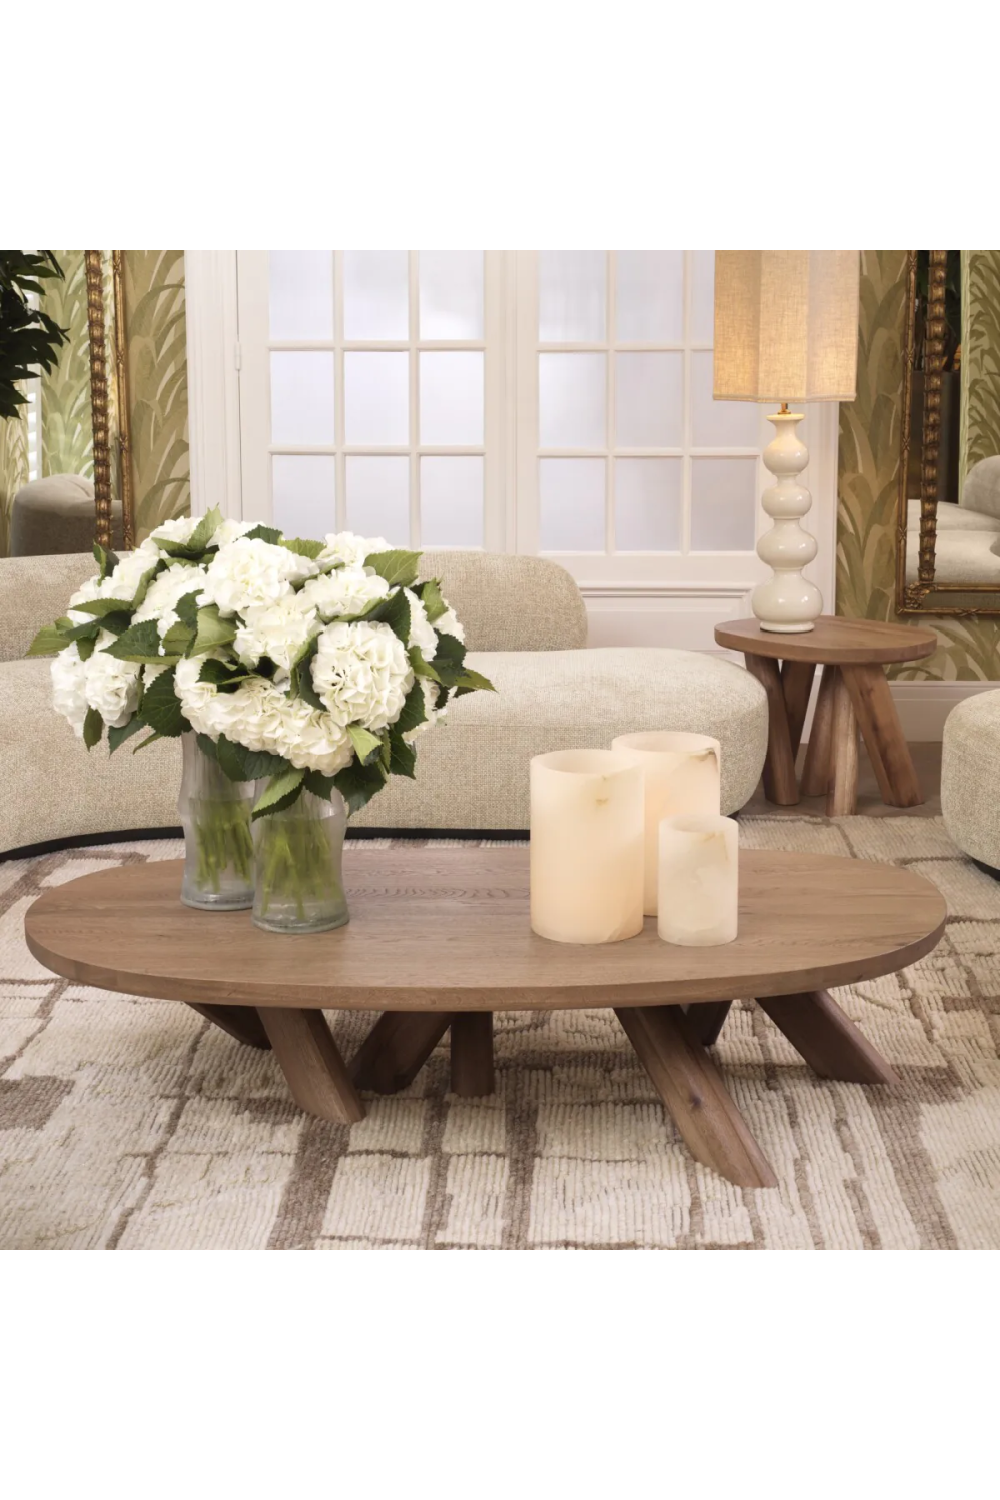 Oval Oak Side Table | Eichholtz Bayshore | Oroa.com